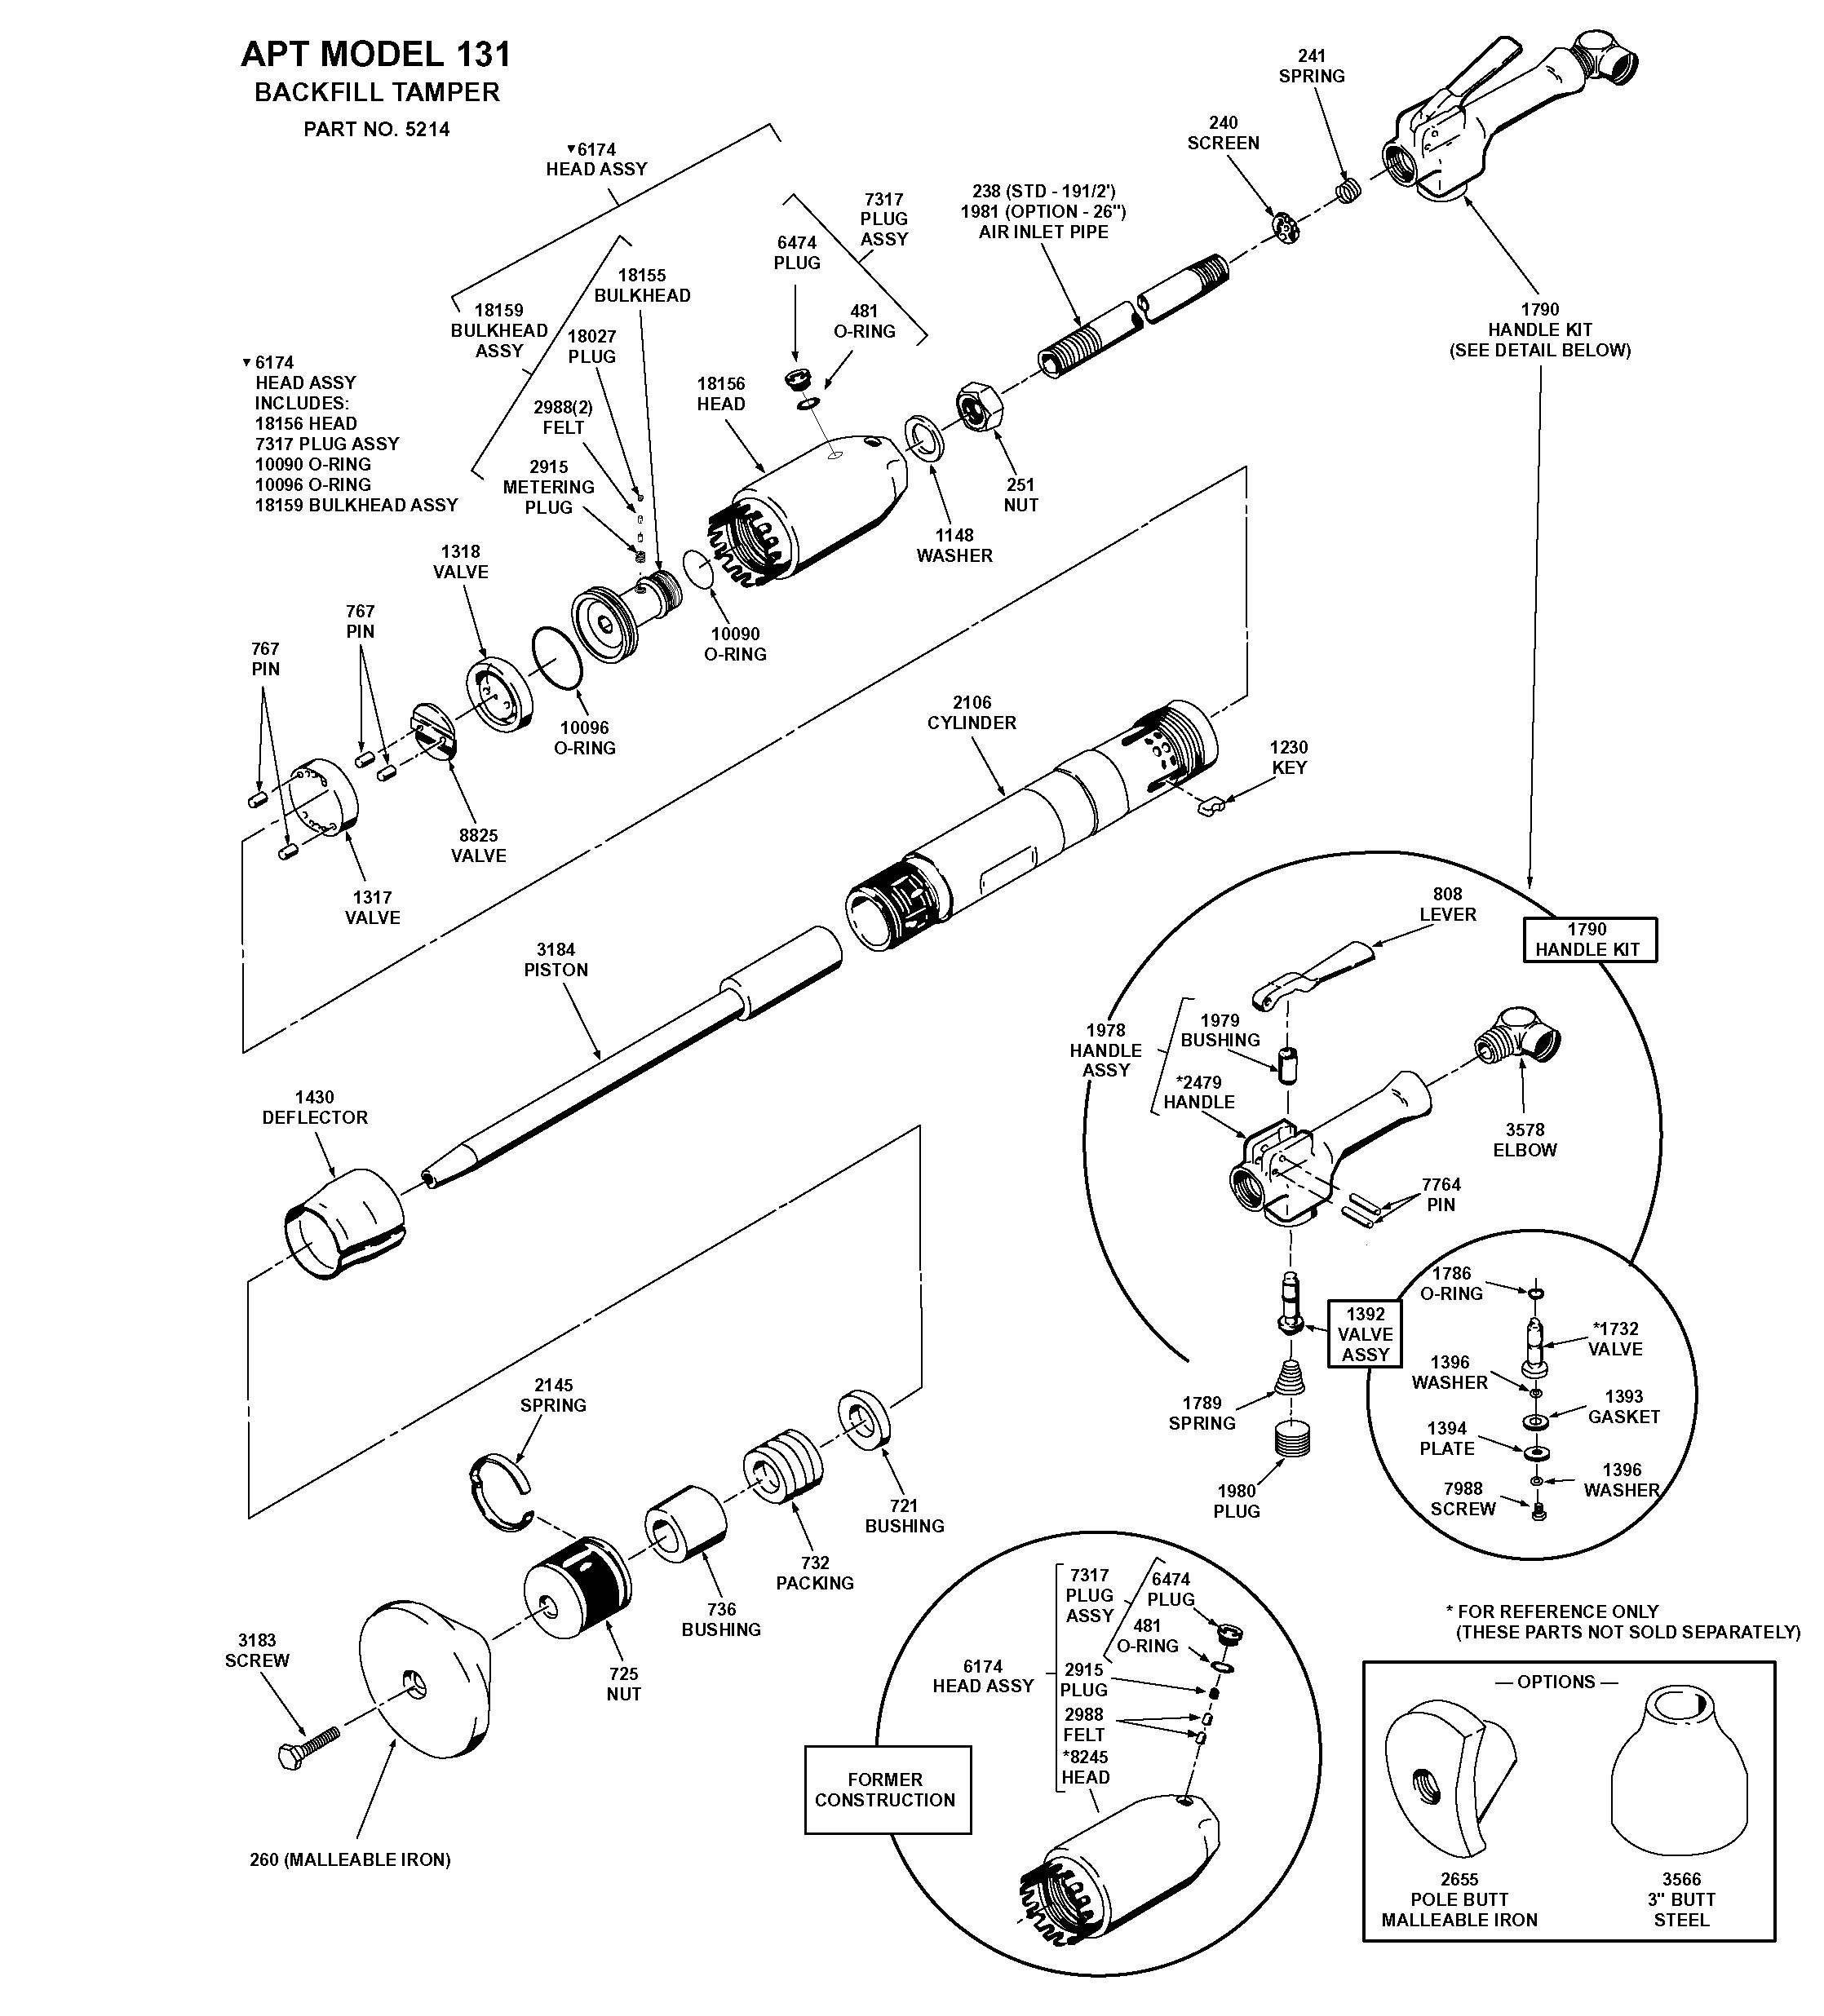 Frigidaire Dishwasher Parts Diagram Frigidaire Refrigerator Parts In Ice Maker Wiring within Diagram Of Frigidaire Dishwasher Parts Diagram